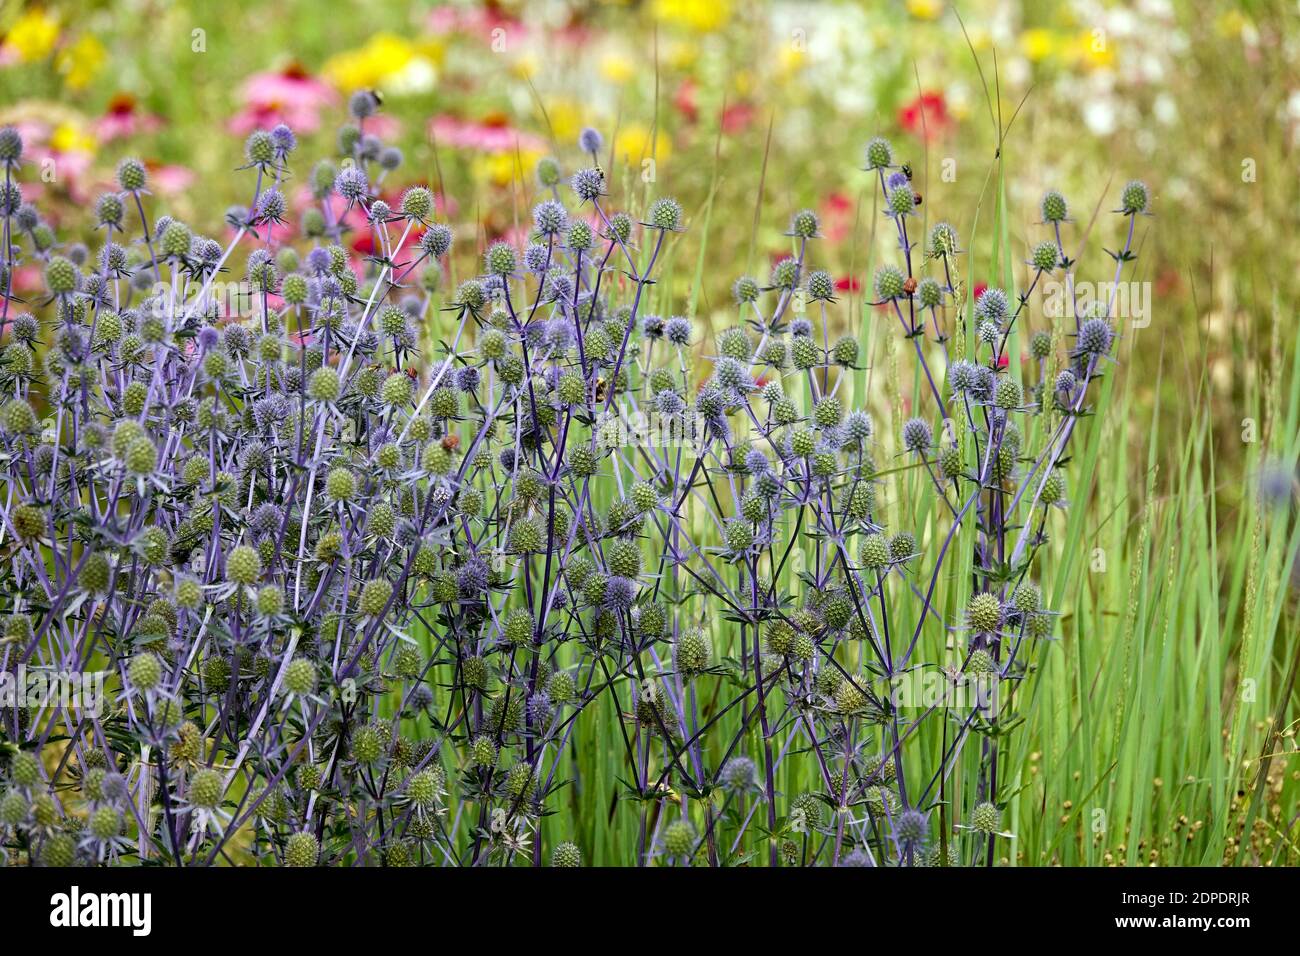 Sea holly, Eryngium tripartitum garden border july plants blue flowers Stock Photo